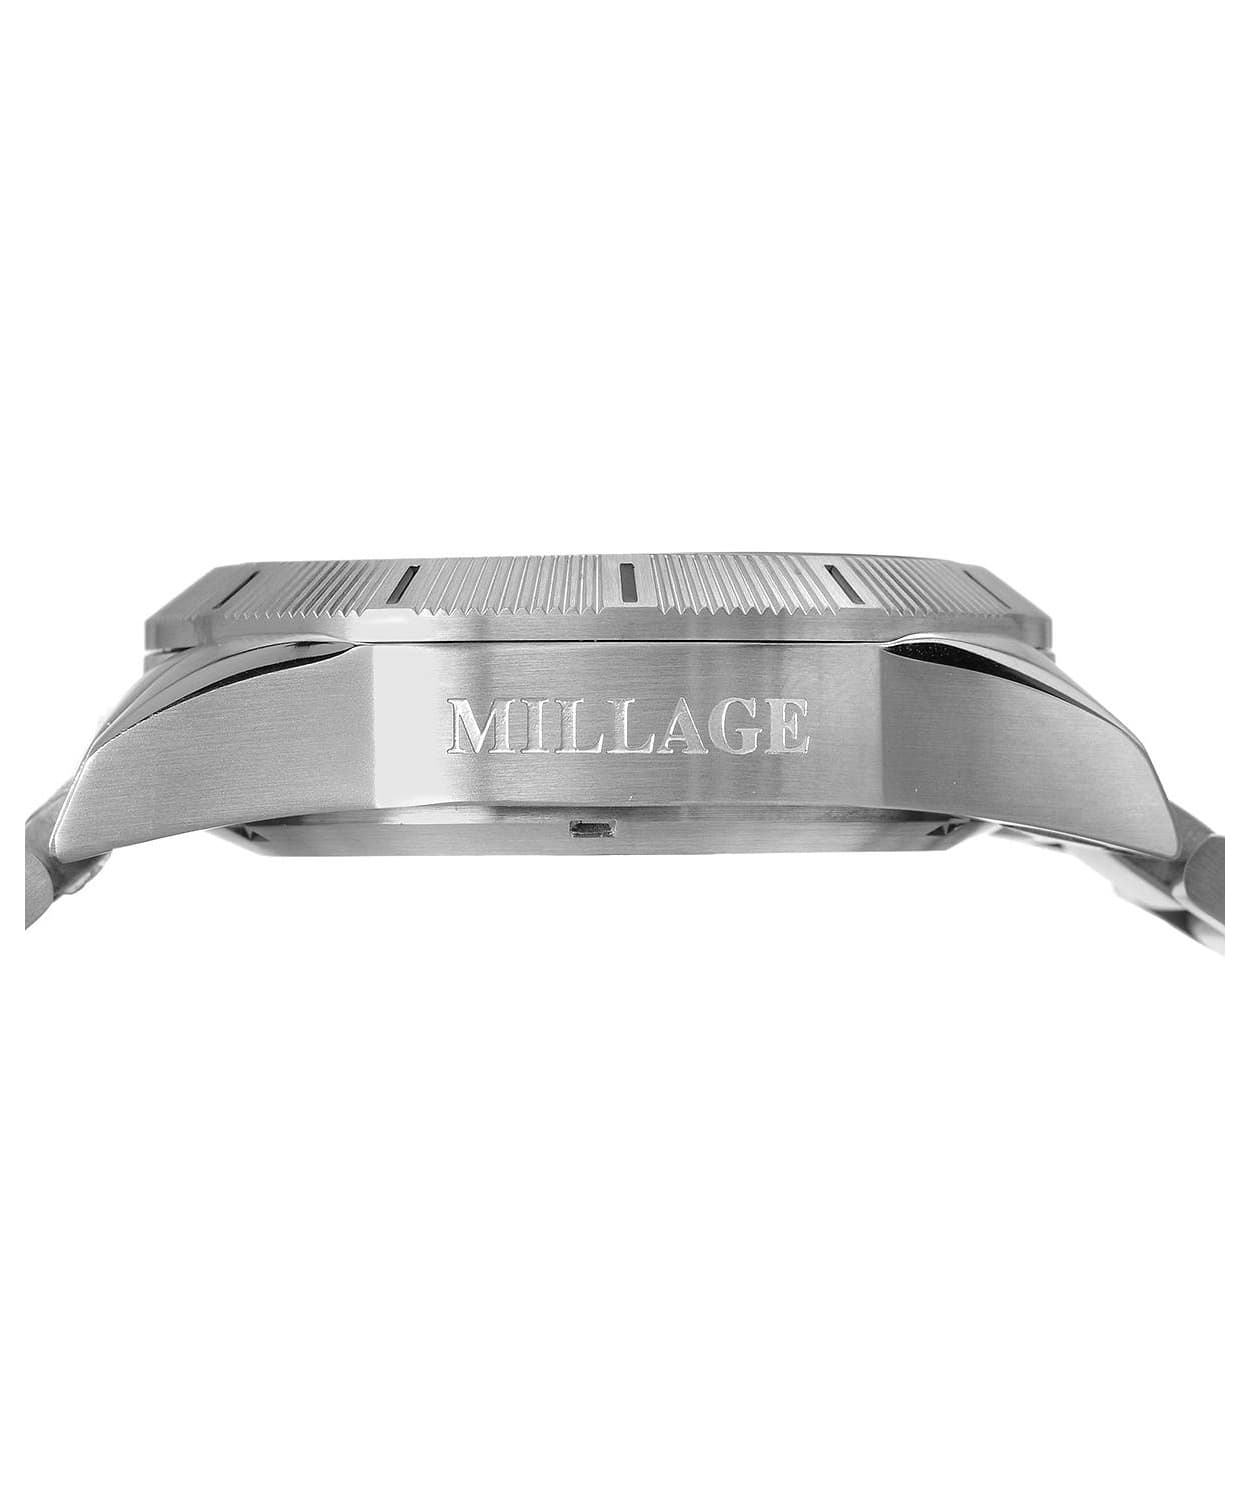 Millage Esquire Collection Model M3426 Watch - Swiss Quartz Movement View 3